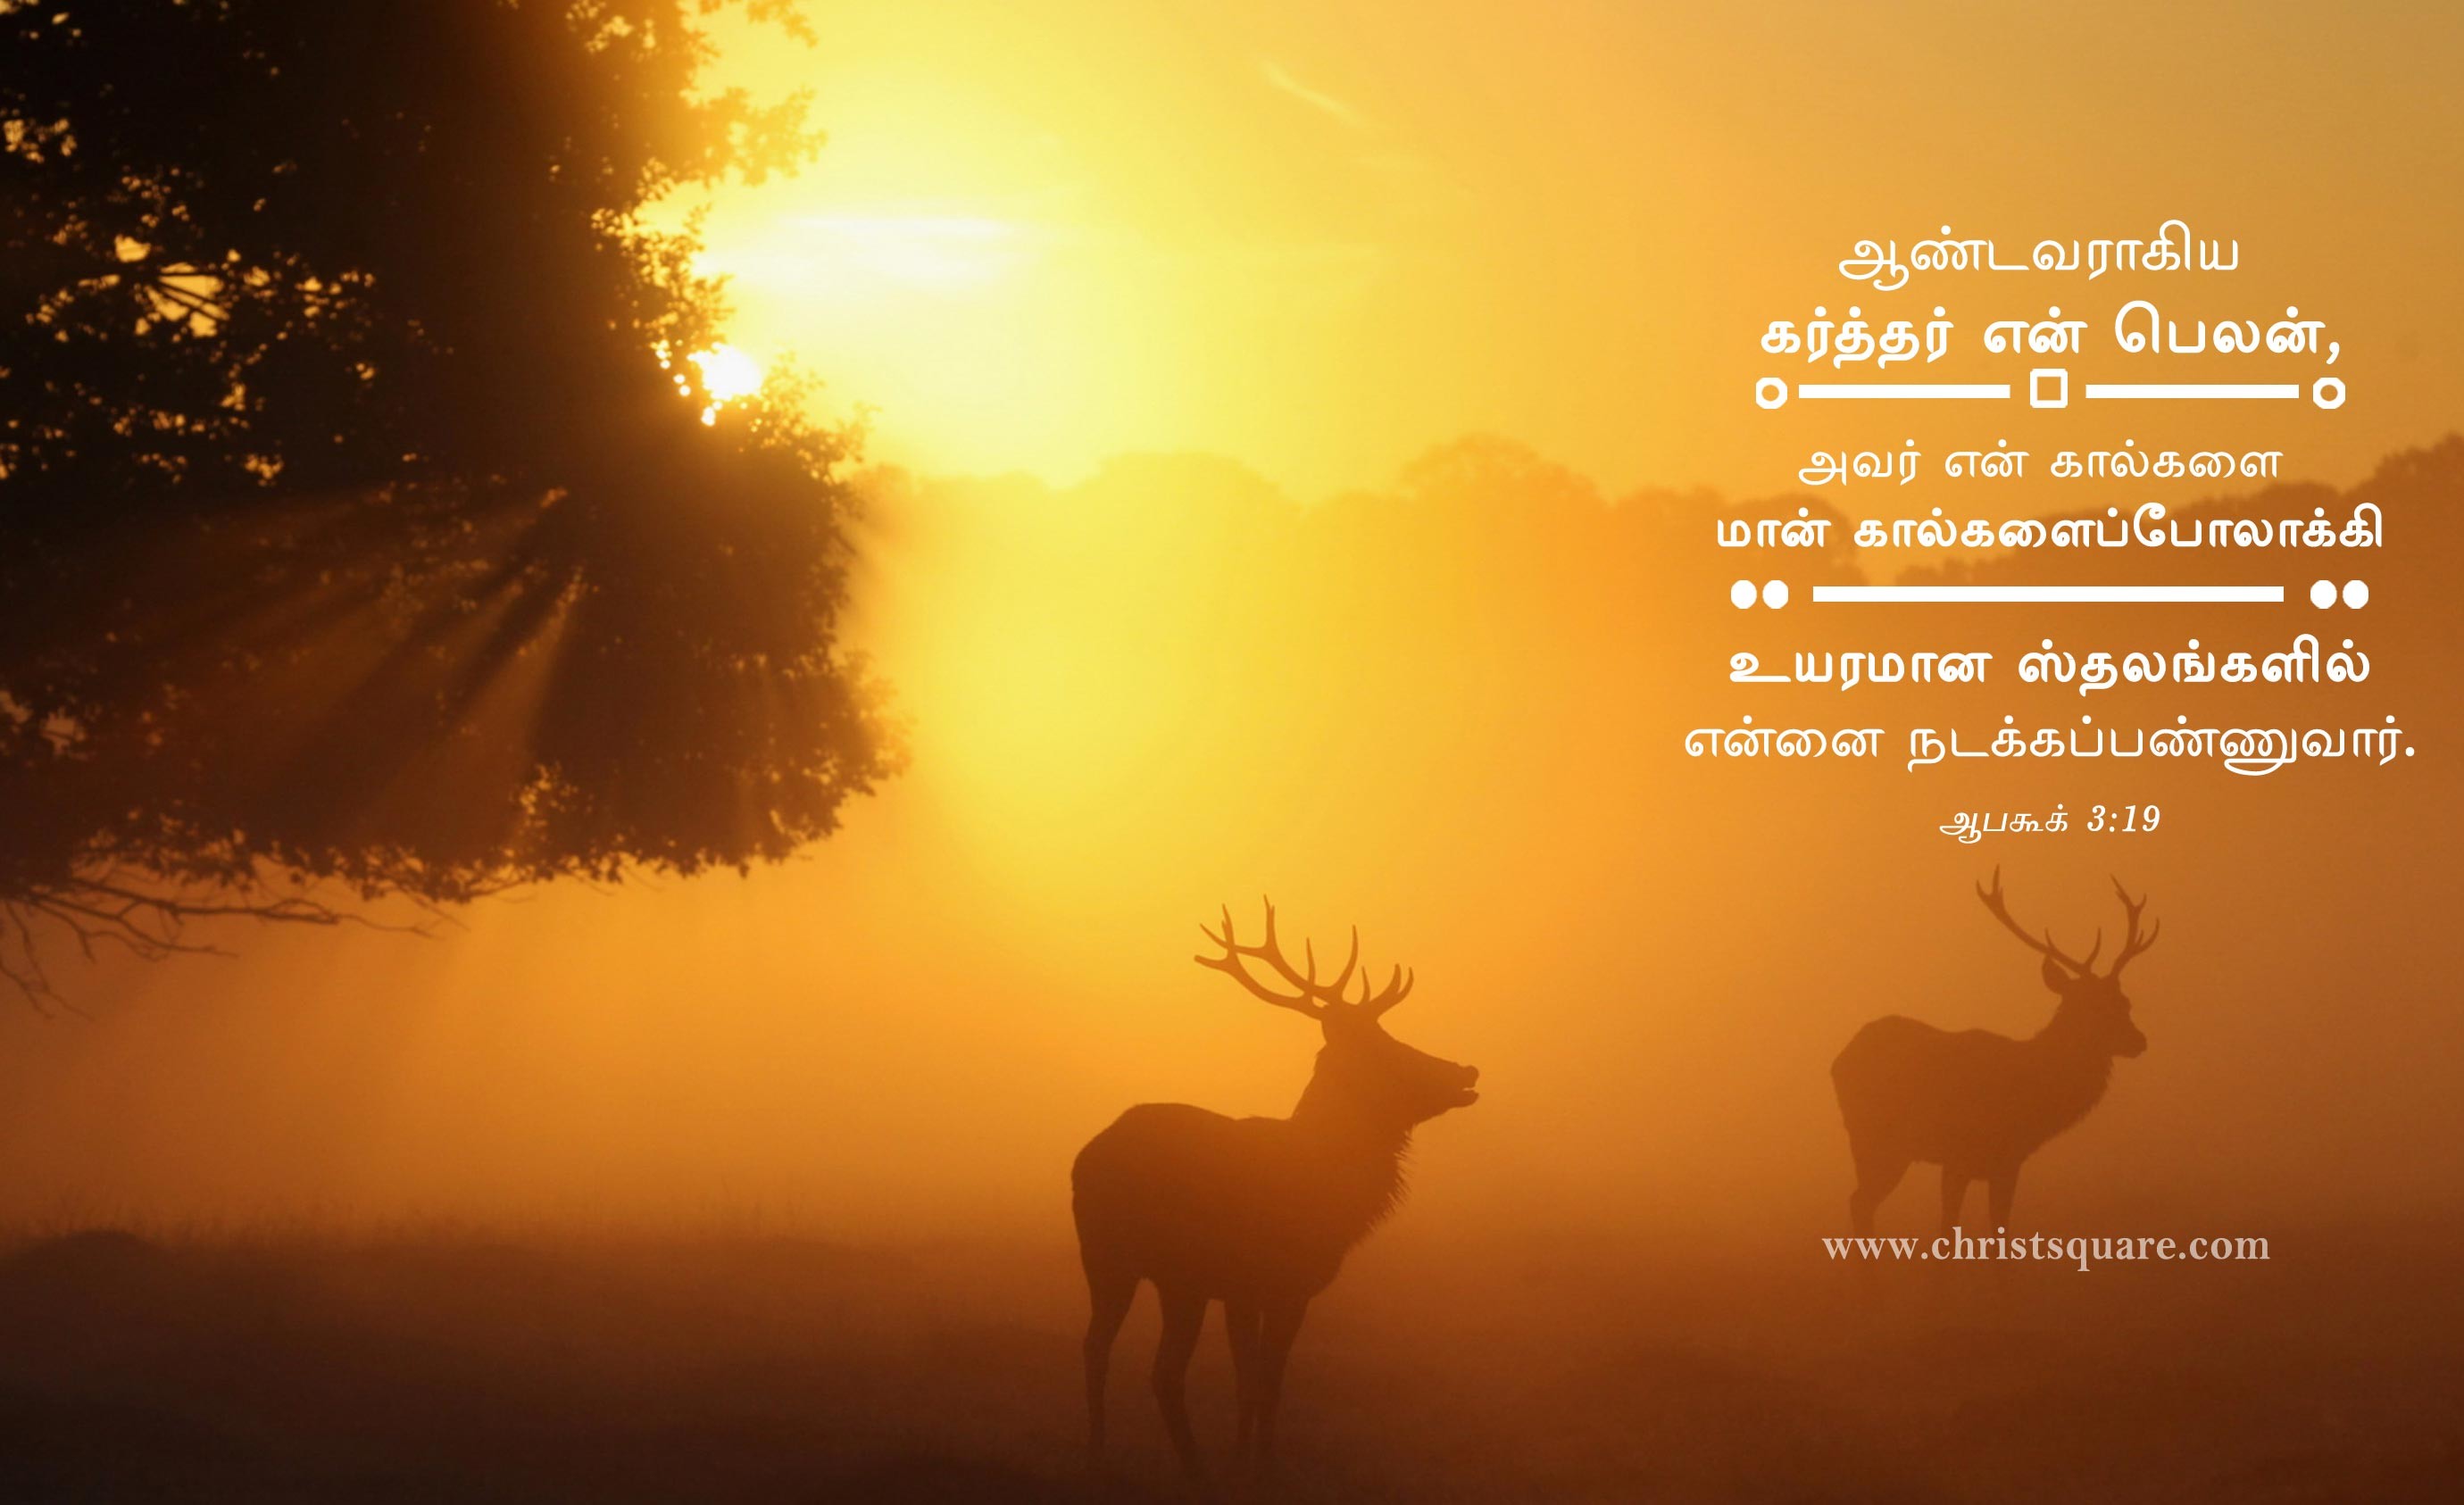 Tamil bible quotes wallpaper - rvlito